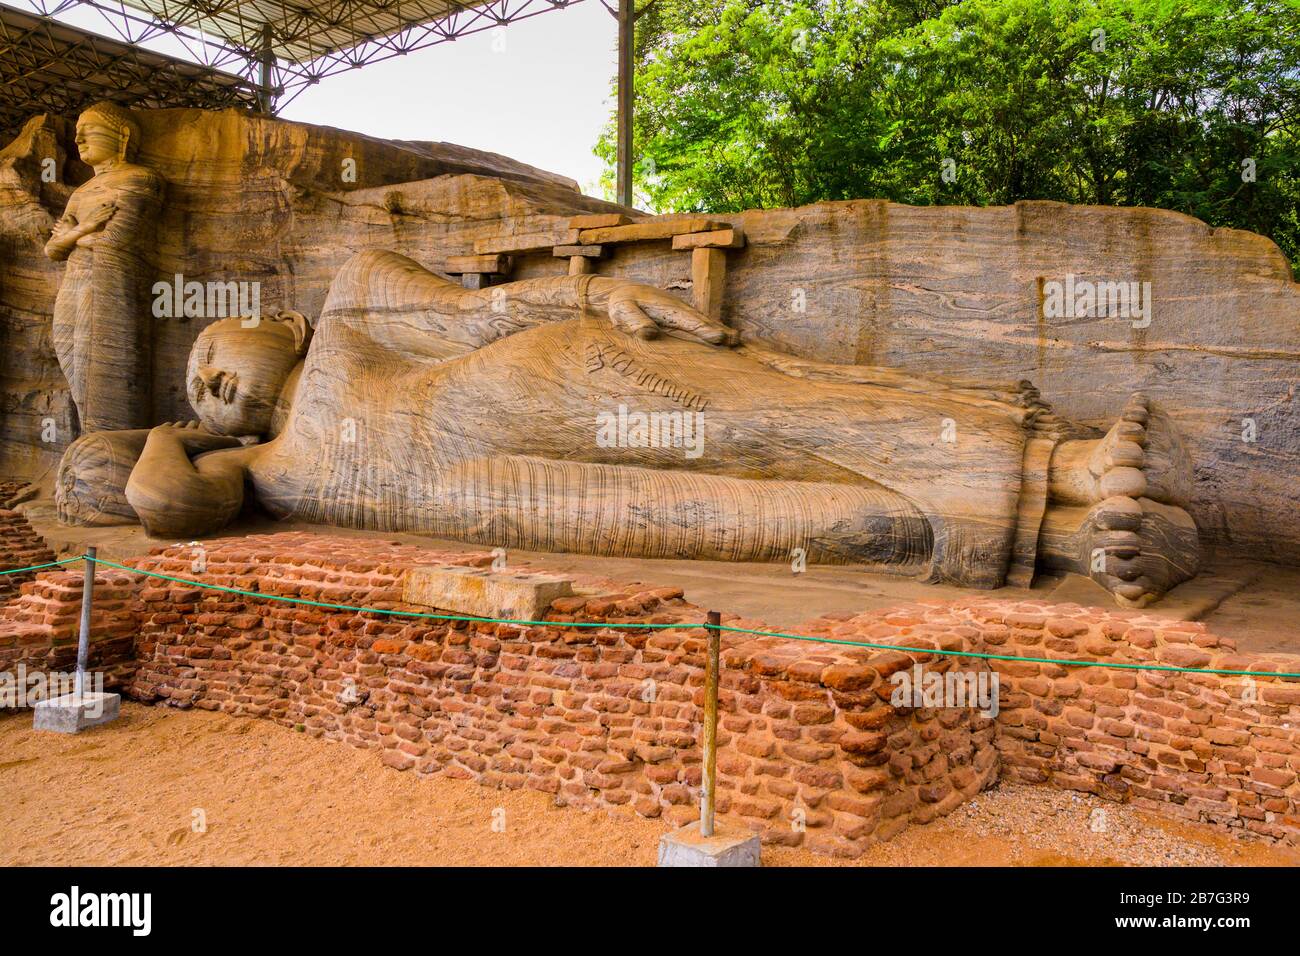 Sri Lanka Ceylon Cultural Triangle Anuradhapura Polonnaruwa Gal Vihara   Buddhist shrine single piece granite statue sculpture reclining Buddha Stock Photo